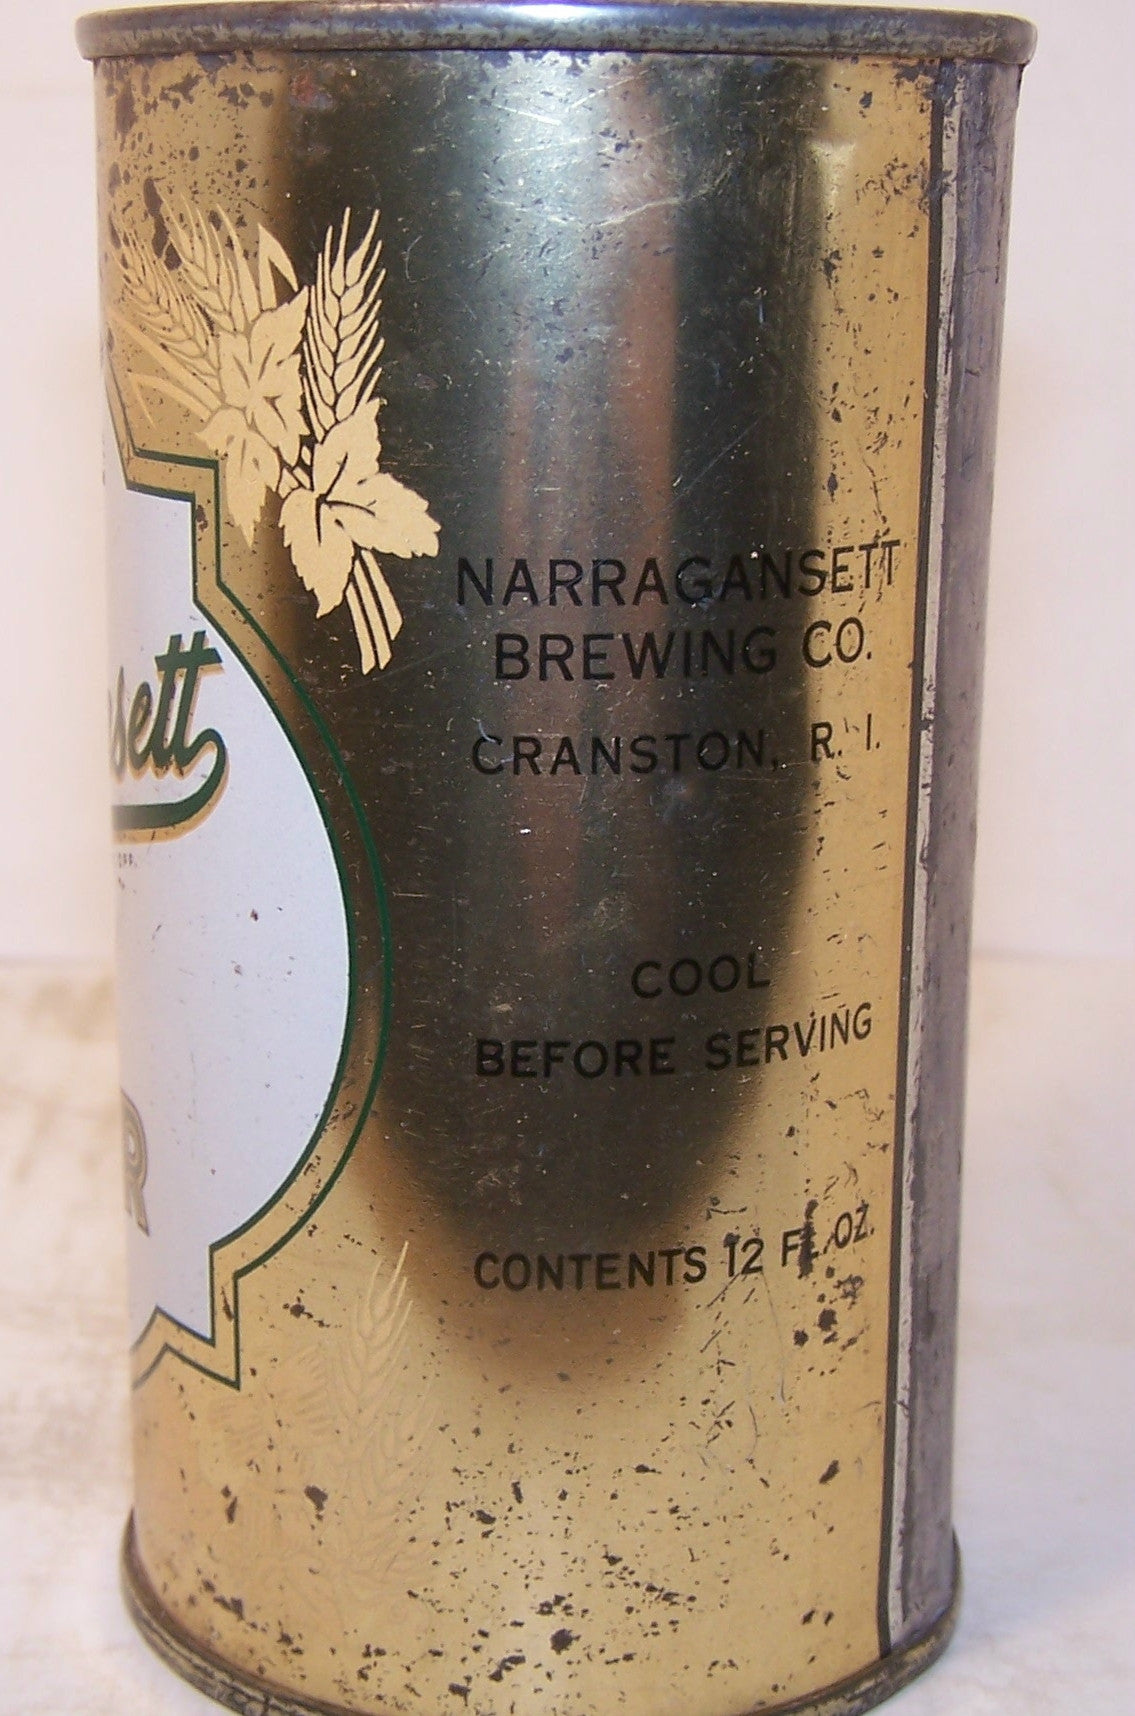 Narragansett select stock Lager Beer, USBC 101-27,Grade 1- sold